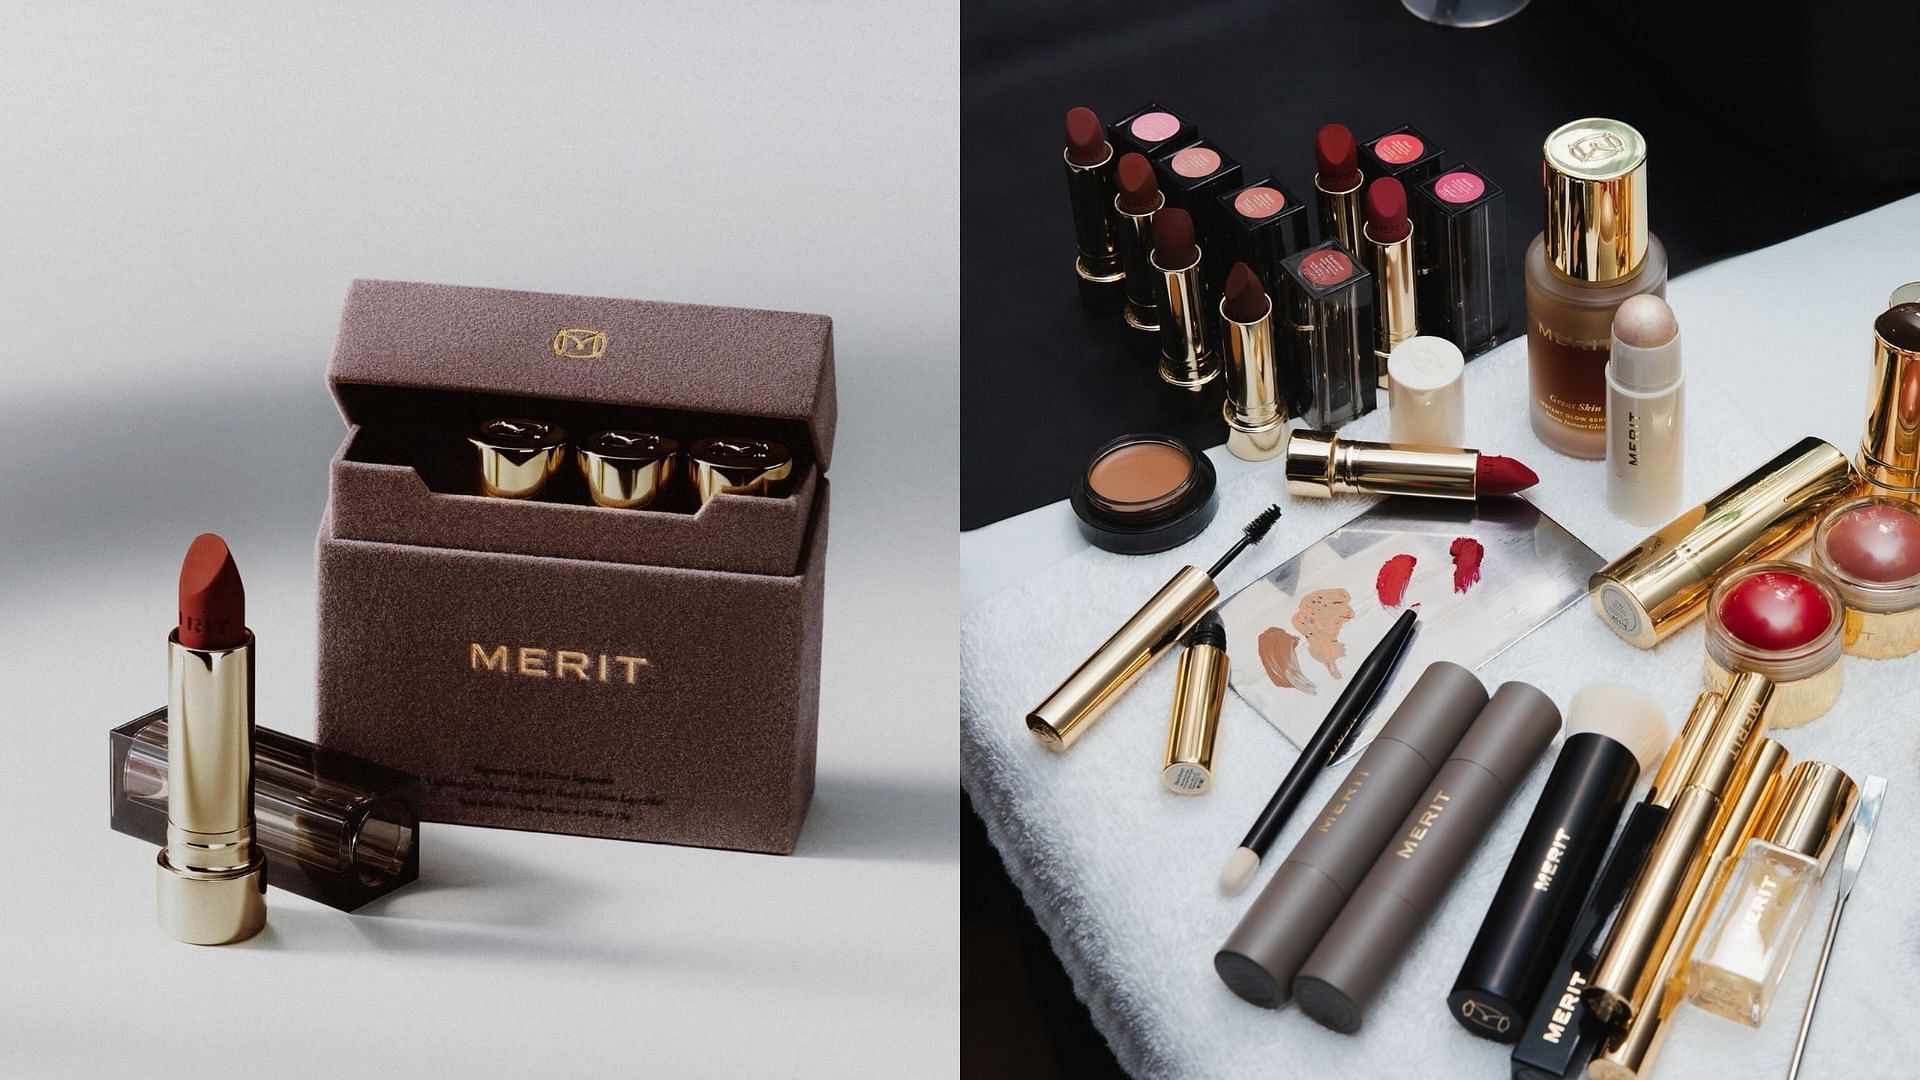 Merit makeup products (Image via @merit/ Instagram)